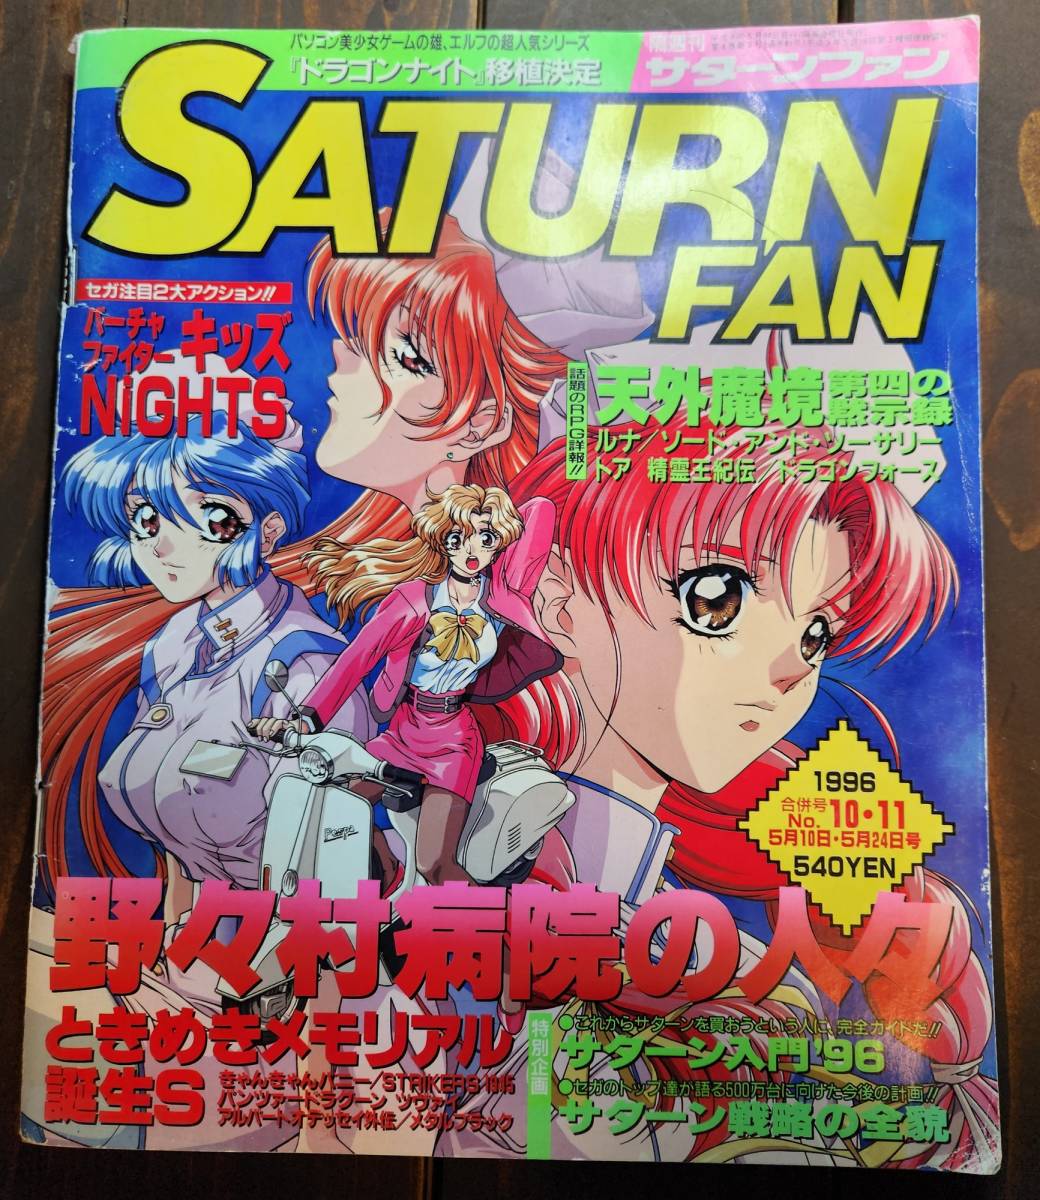 SS セガサターン雑誌　SATURN FAN 1996 №10-11 5月10日-5月24日_画像1